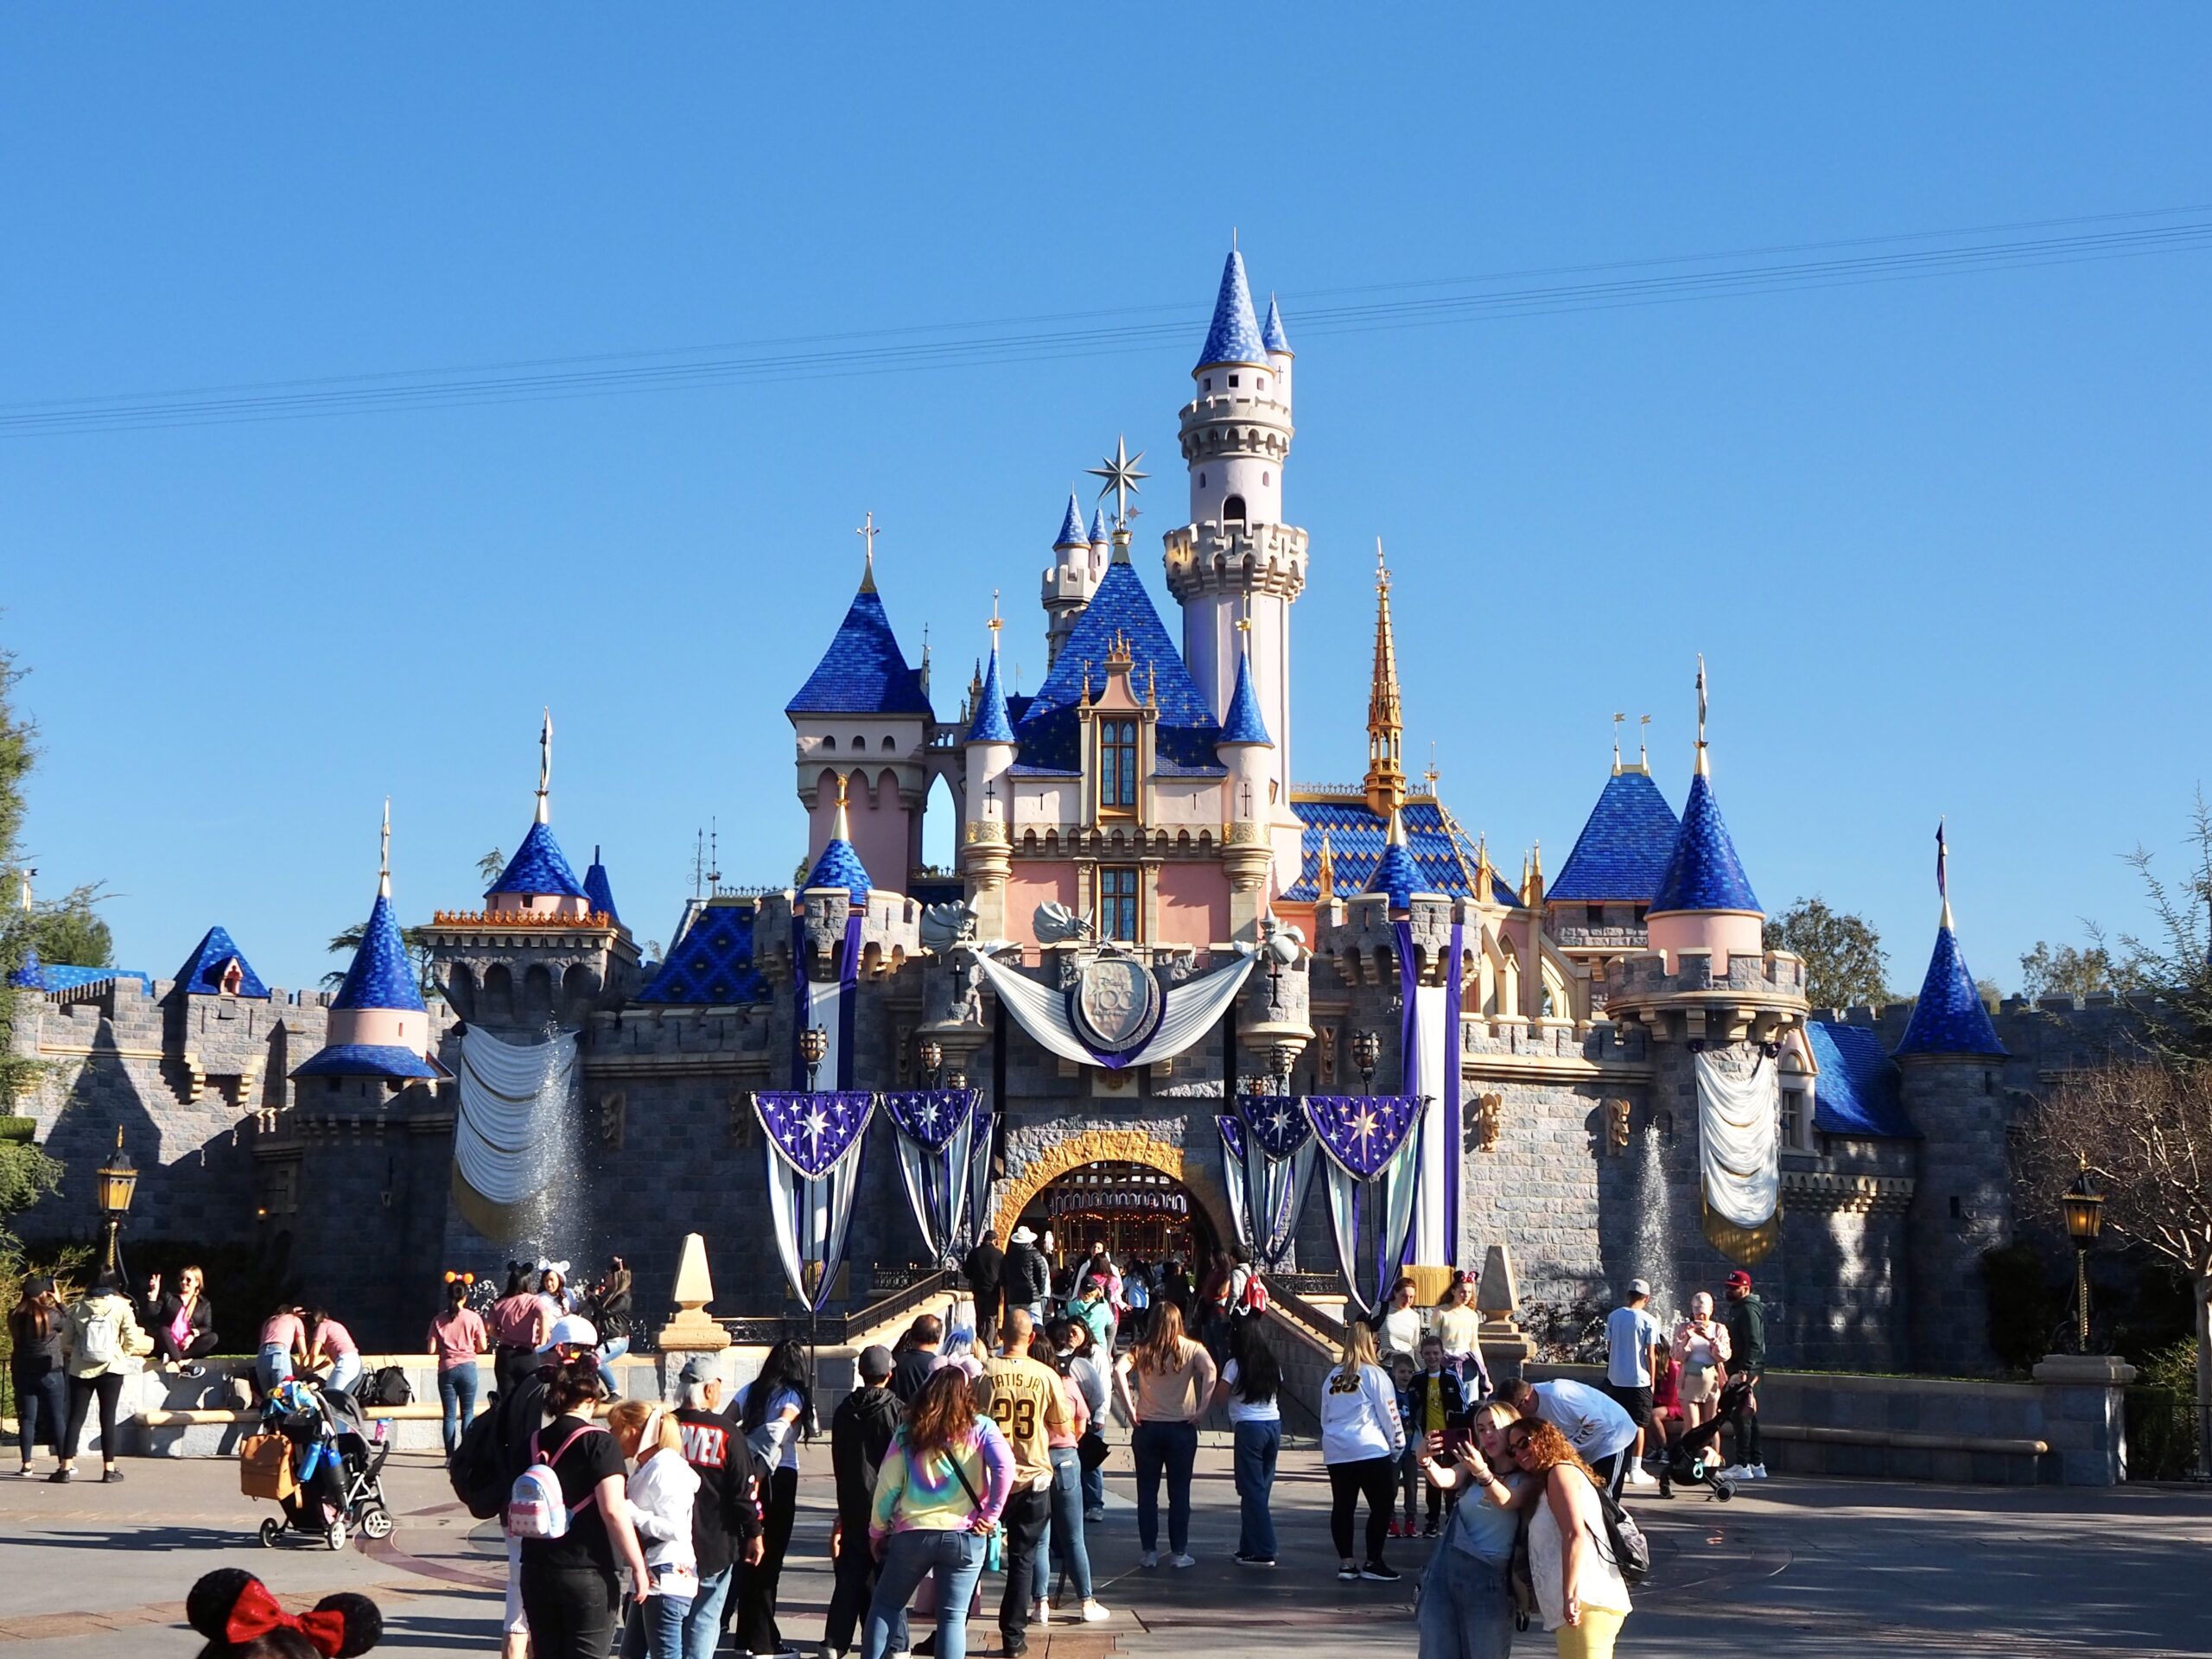 Disneyland California feature image